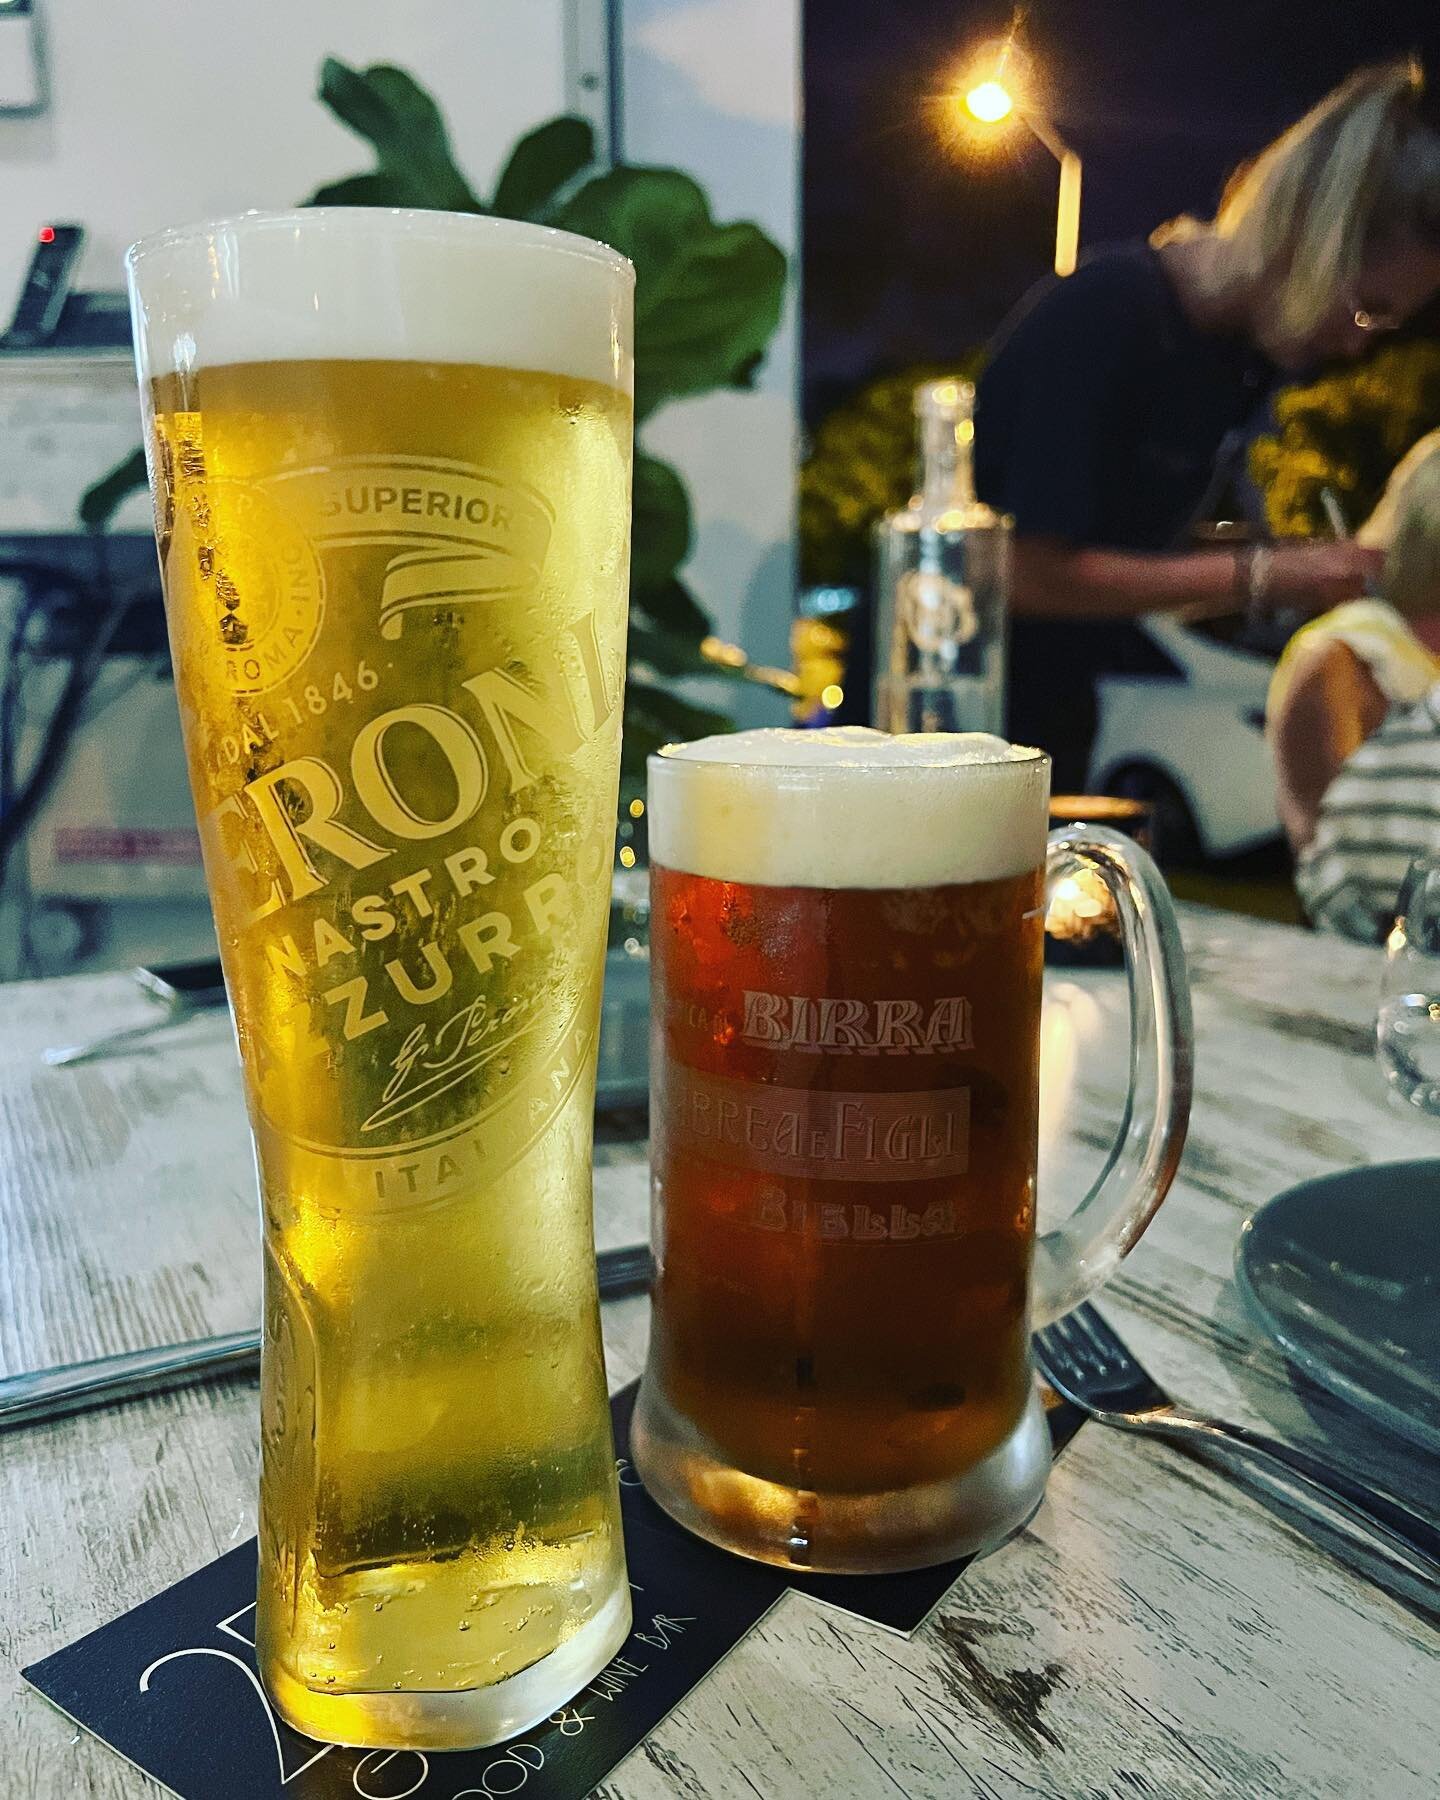 Two classic Italian beers on tap.
#peroni #peroninastroazzurro #menabrea #italianbeer #tapbeer #draftbeer #birramenabrea #birraallaspina #aebeerimports #aandebeerimports #europeanbeer #tapbeerspecialist #importedbeer